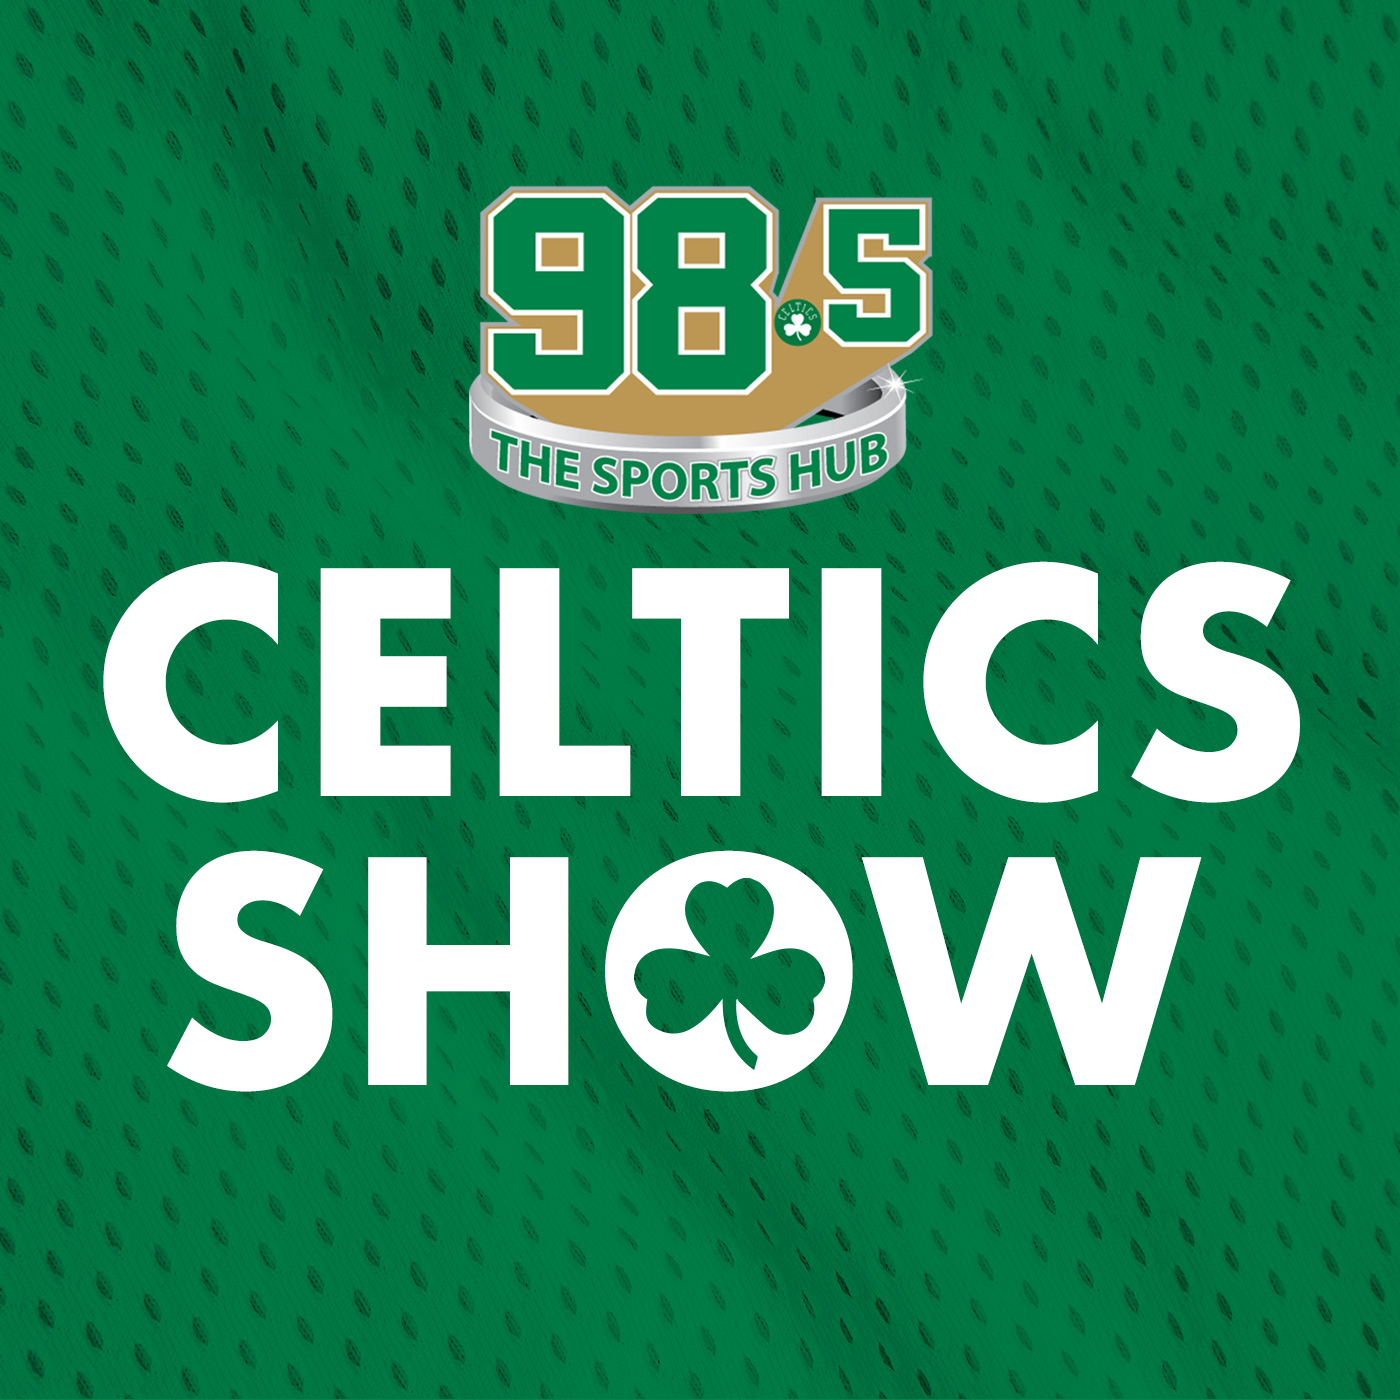 Jayson Tatum in crunch time // Joe Mazzulla // Celtics playoff outlook